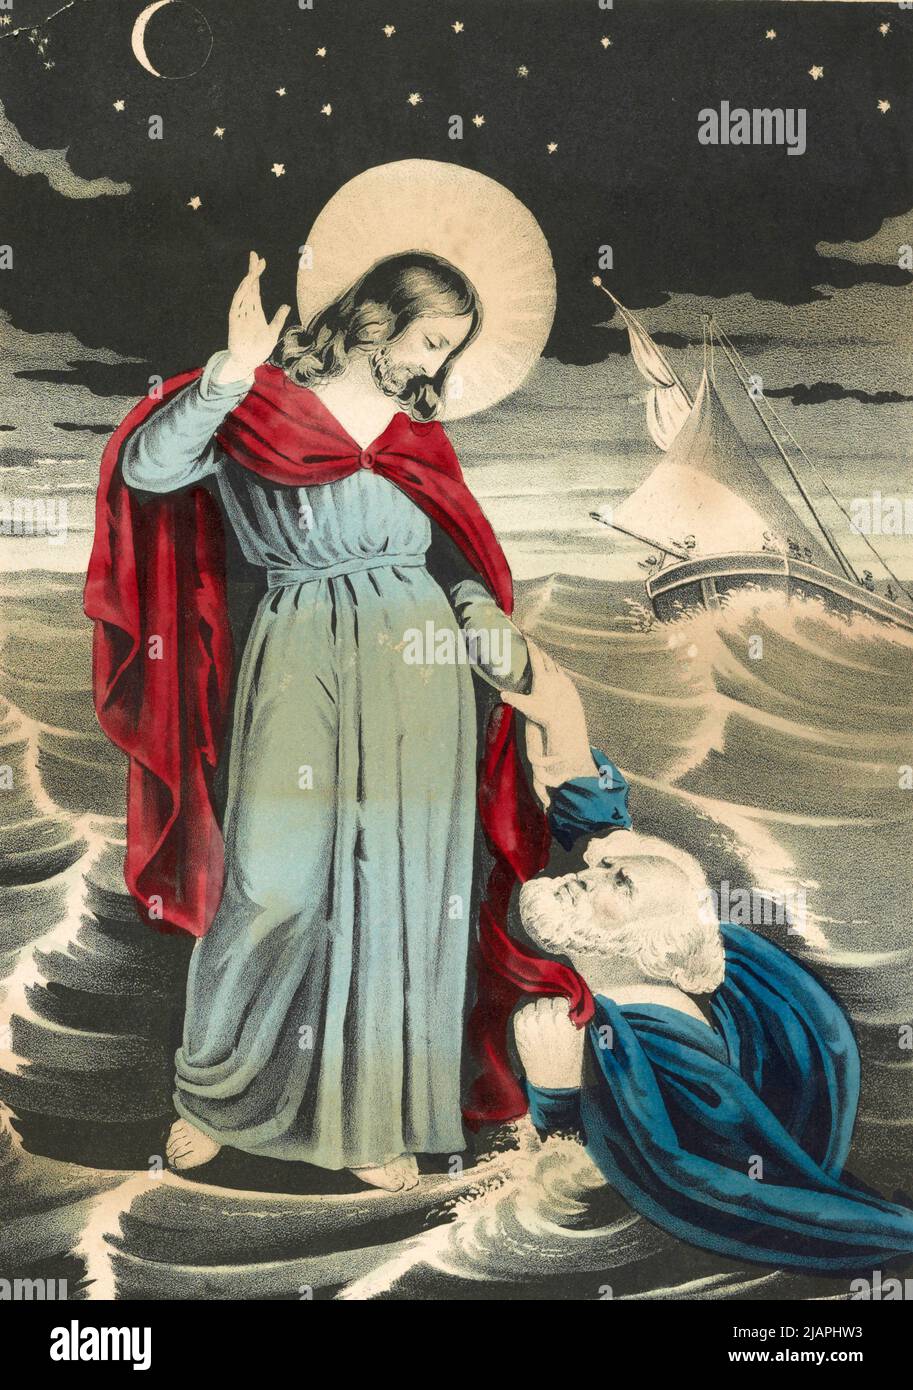 A 19th Century illustration of Jesus walking on water Stock Photo